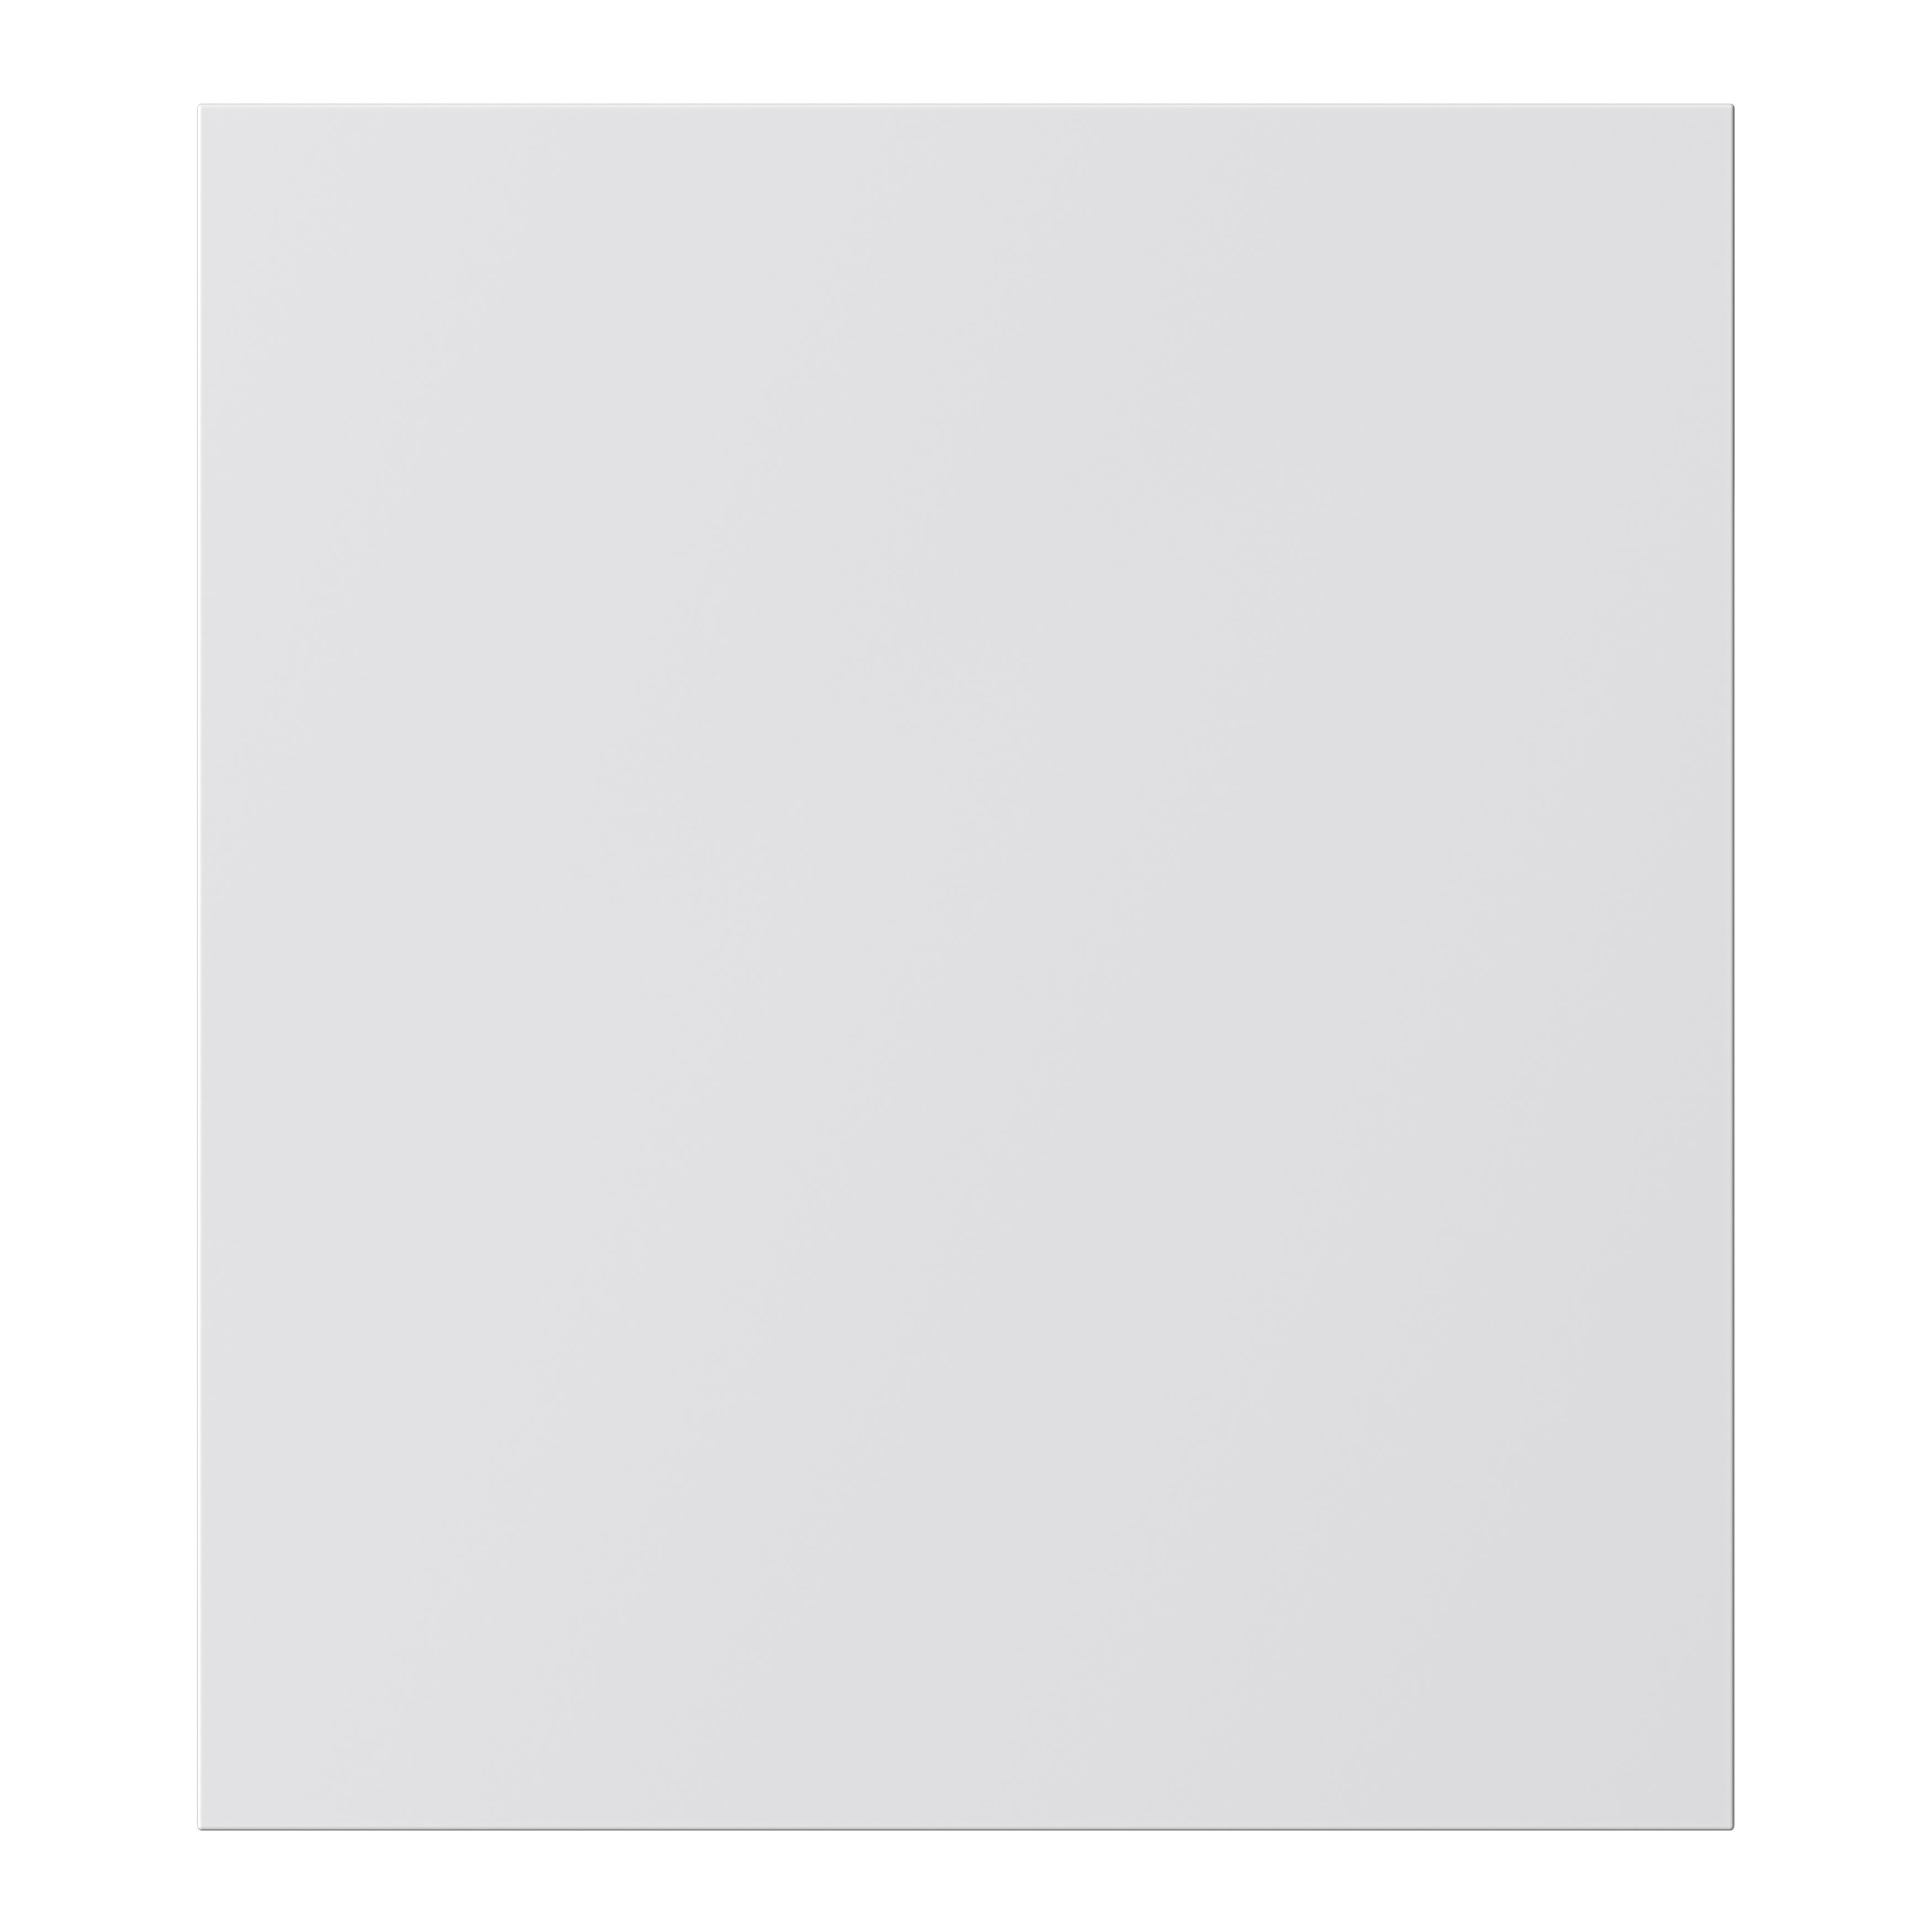 GoodHome Alisma Innovo handleless gloss light grey slab Drawer front, bridging door & bi fold door, (W)300mm